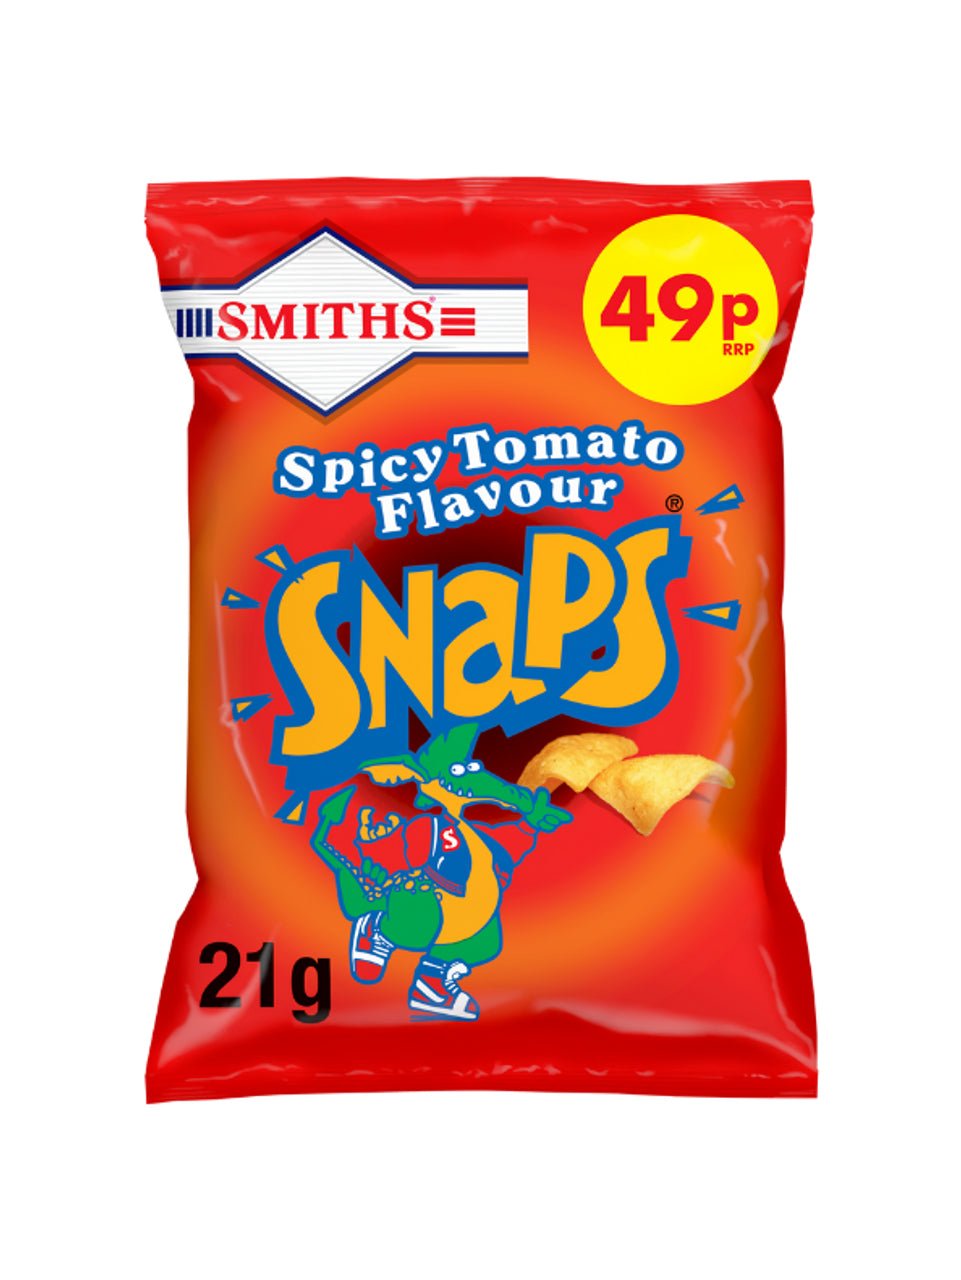 Smiths Tomato Snaps Crisps 21g (one bag)